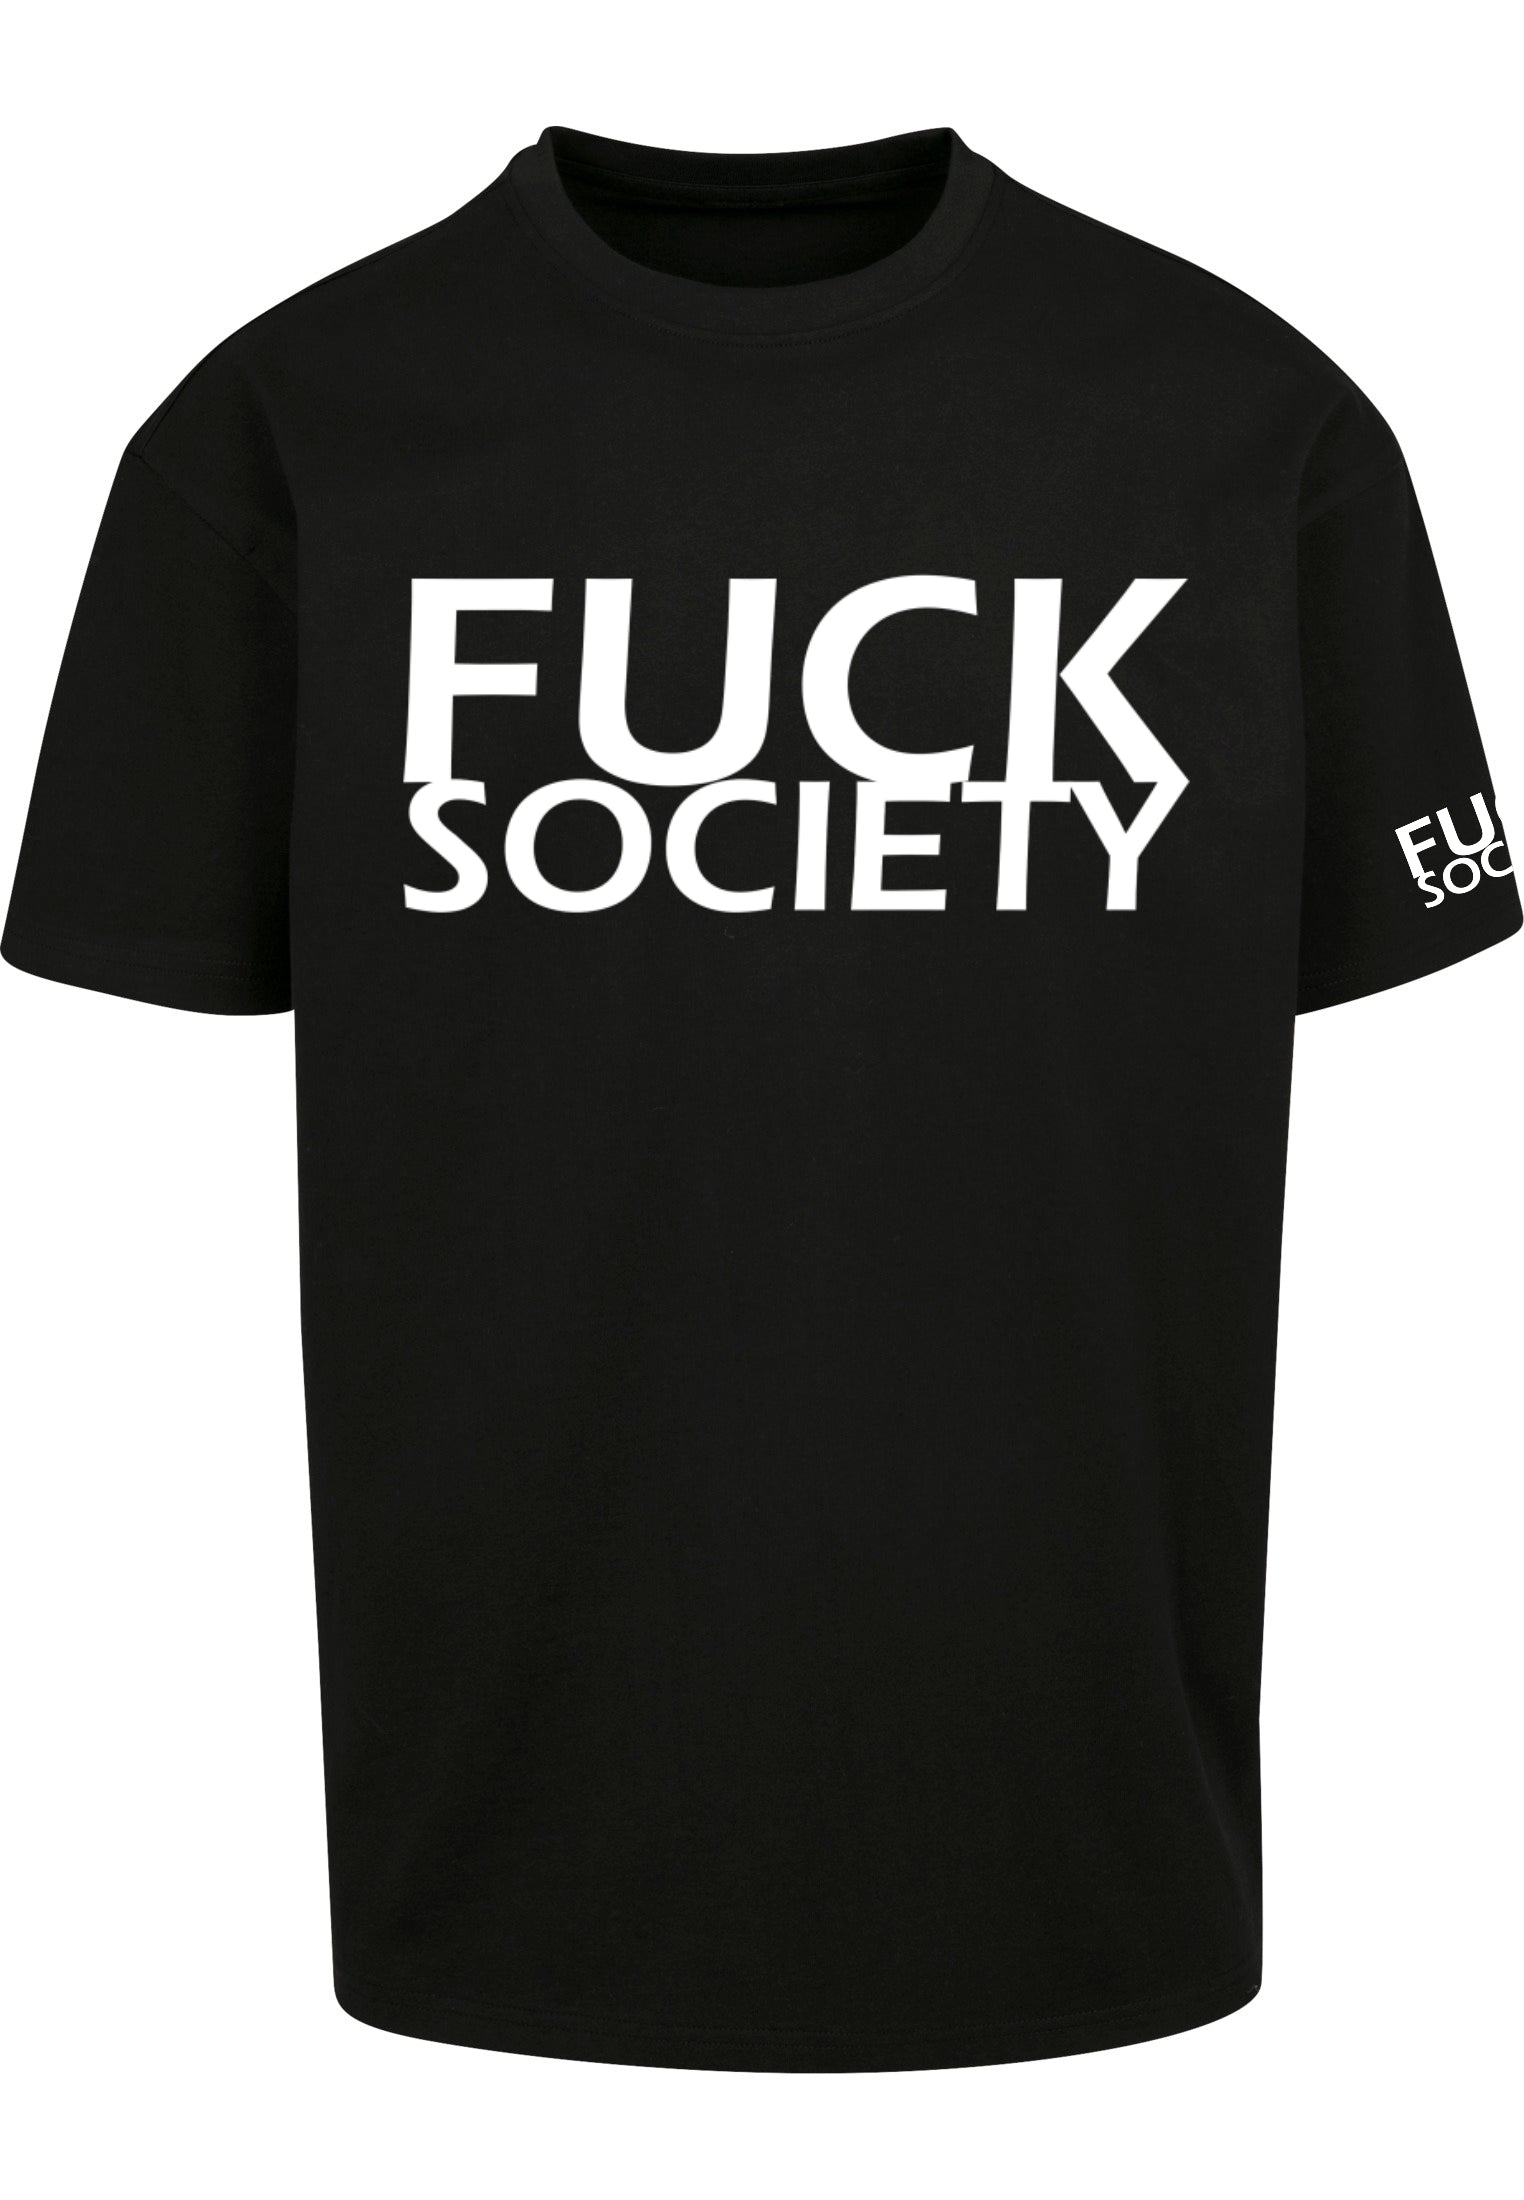 FUCK SOCIETY Shirt